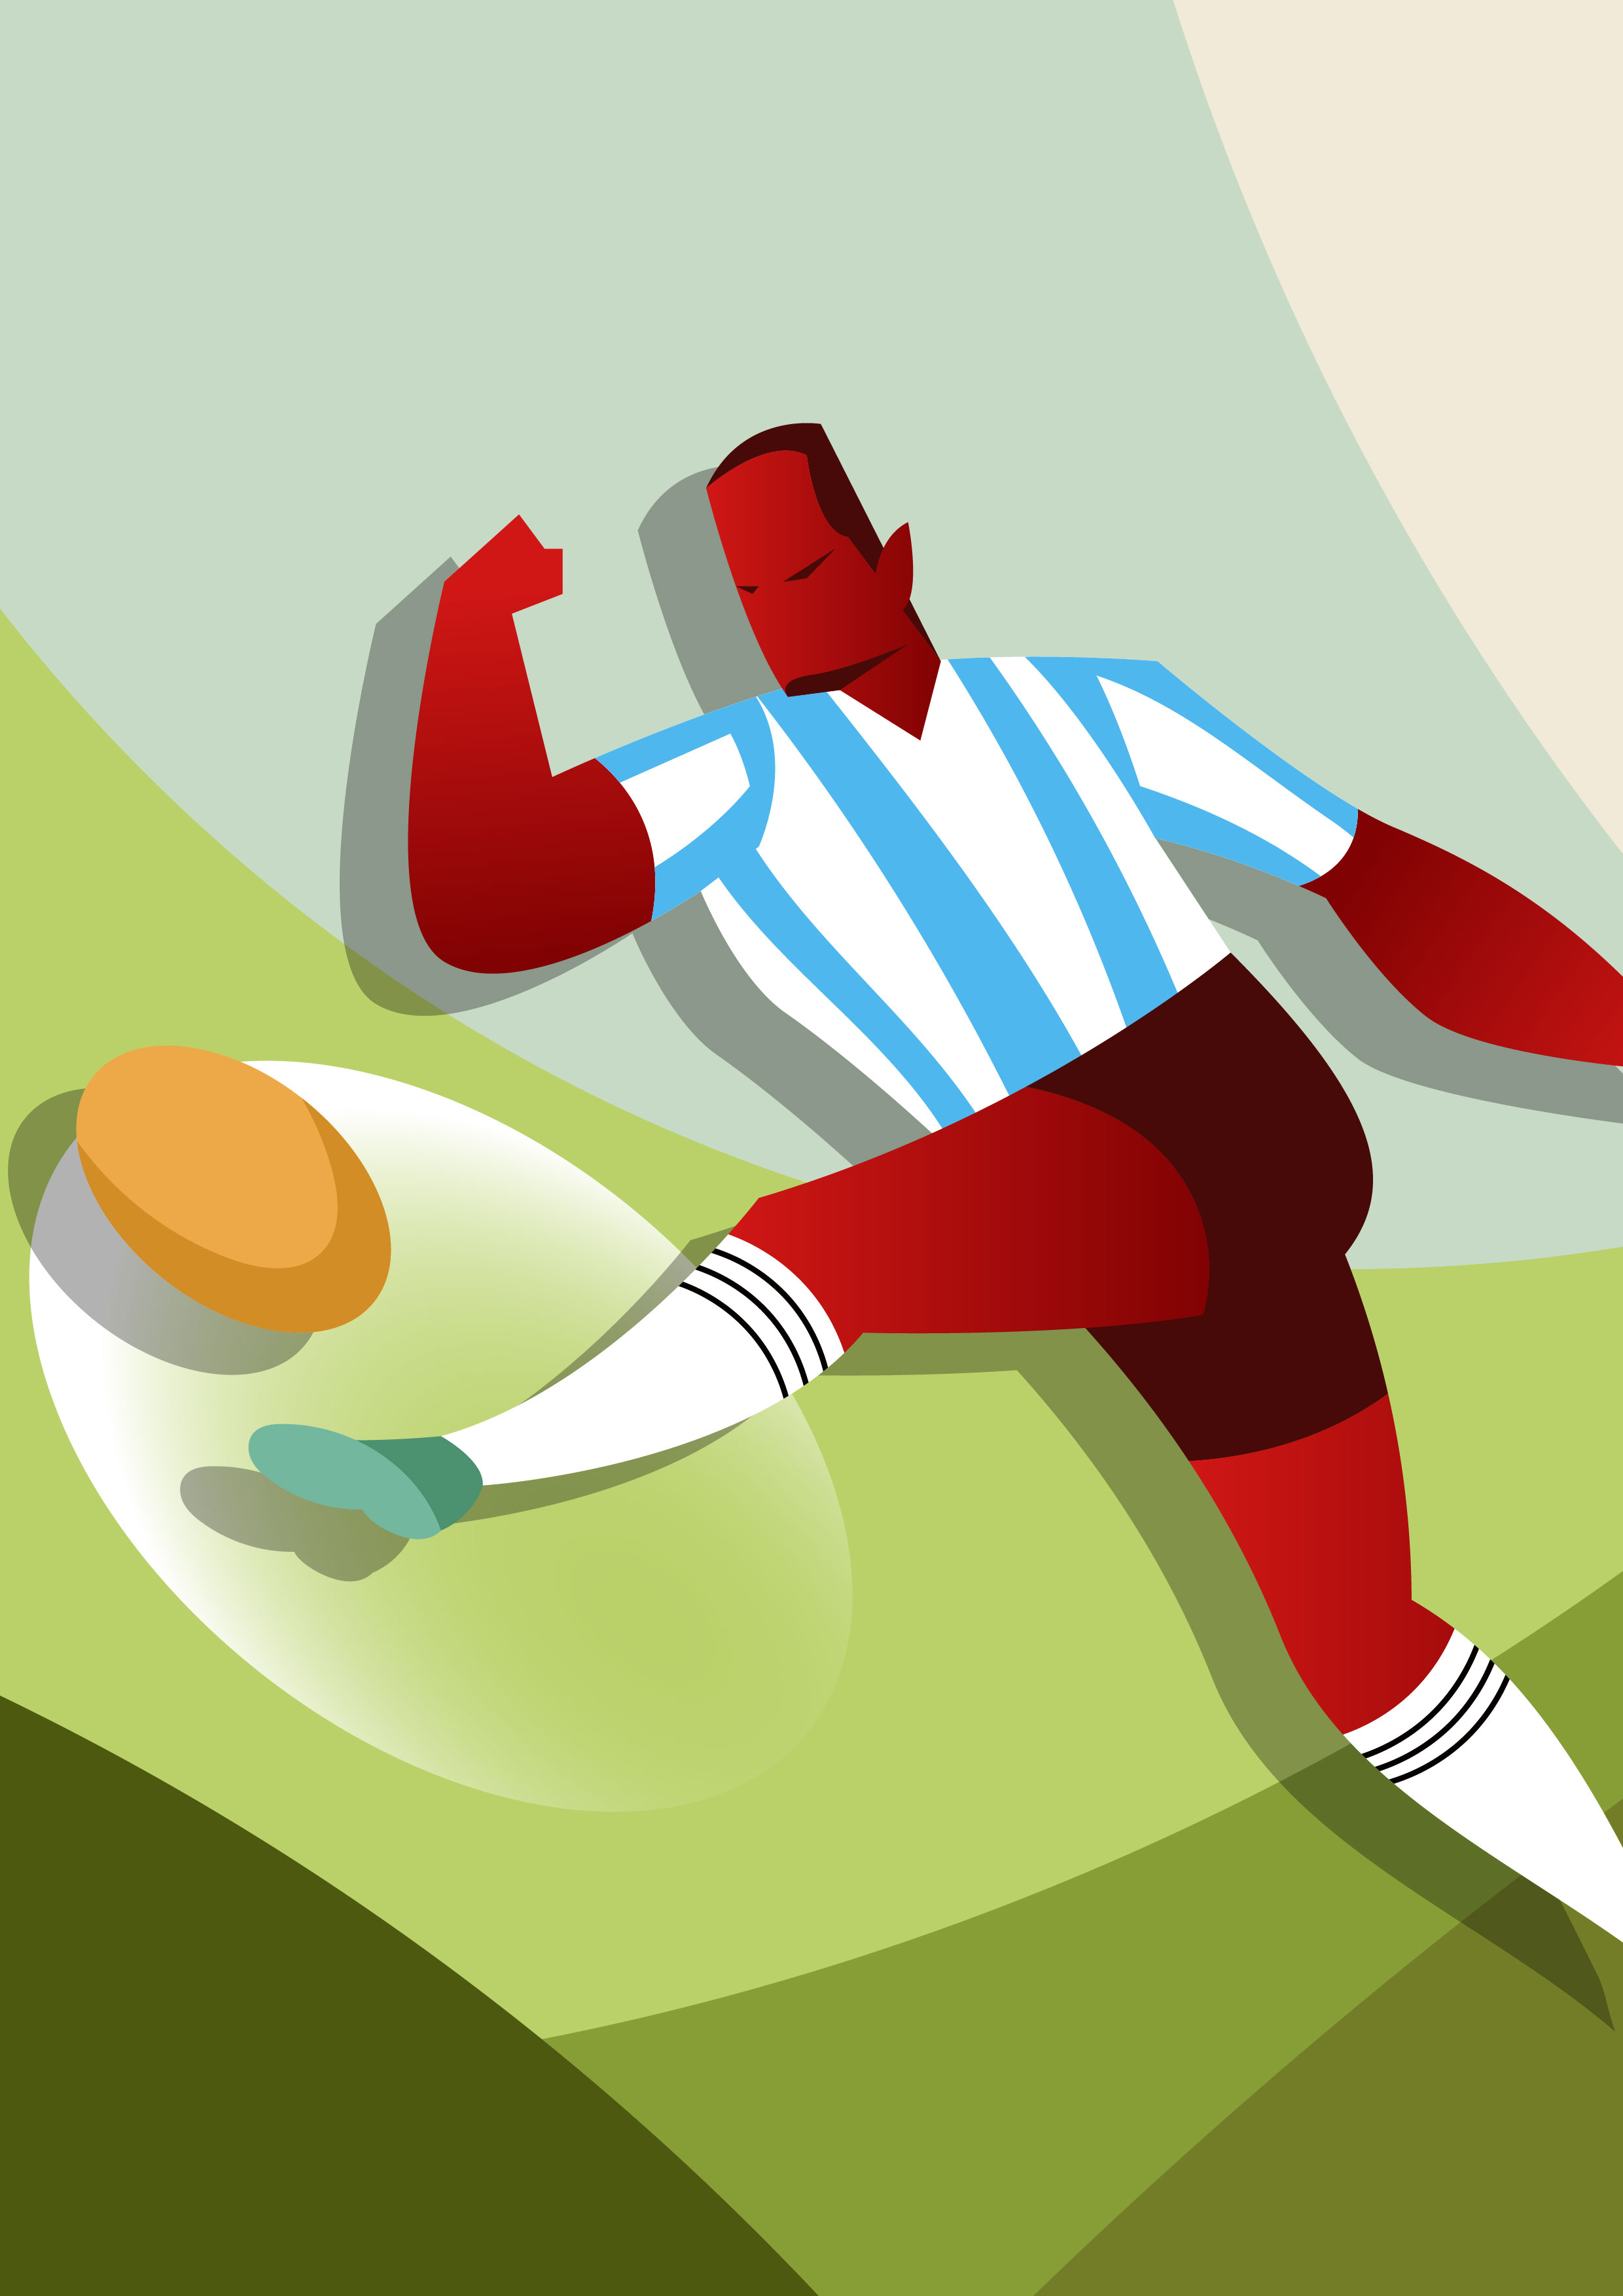 Argentina Soccer Players Illustration 208266 - Download Free Vectors